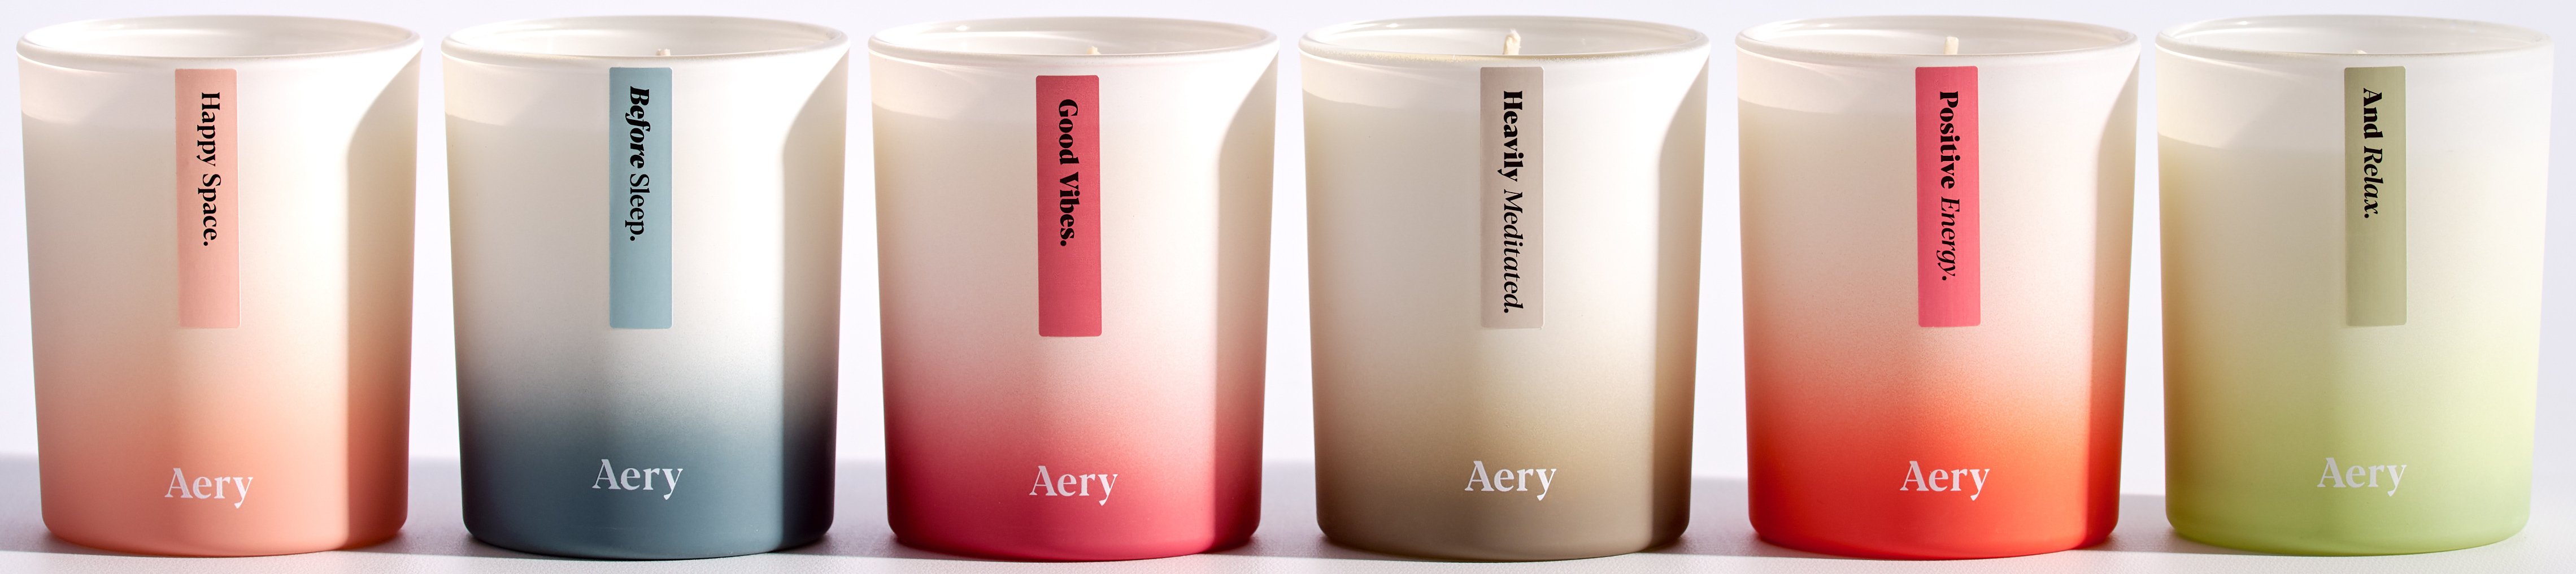 Full Range of Aromatherapy Candles